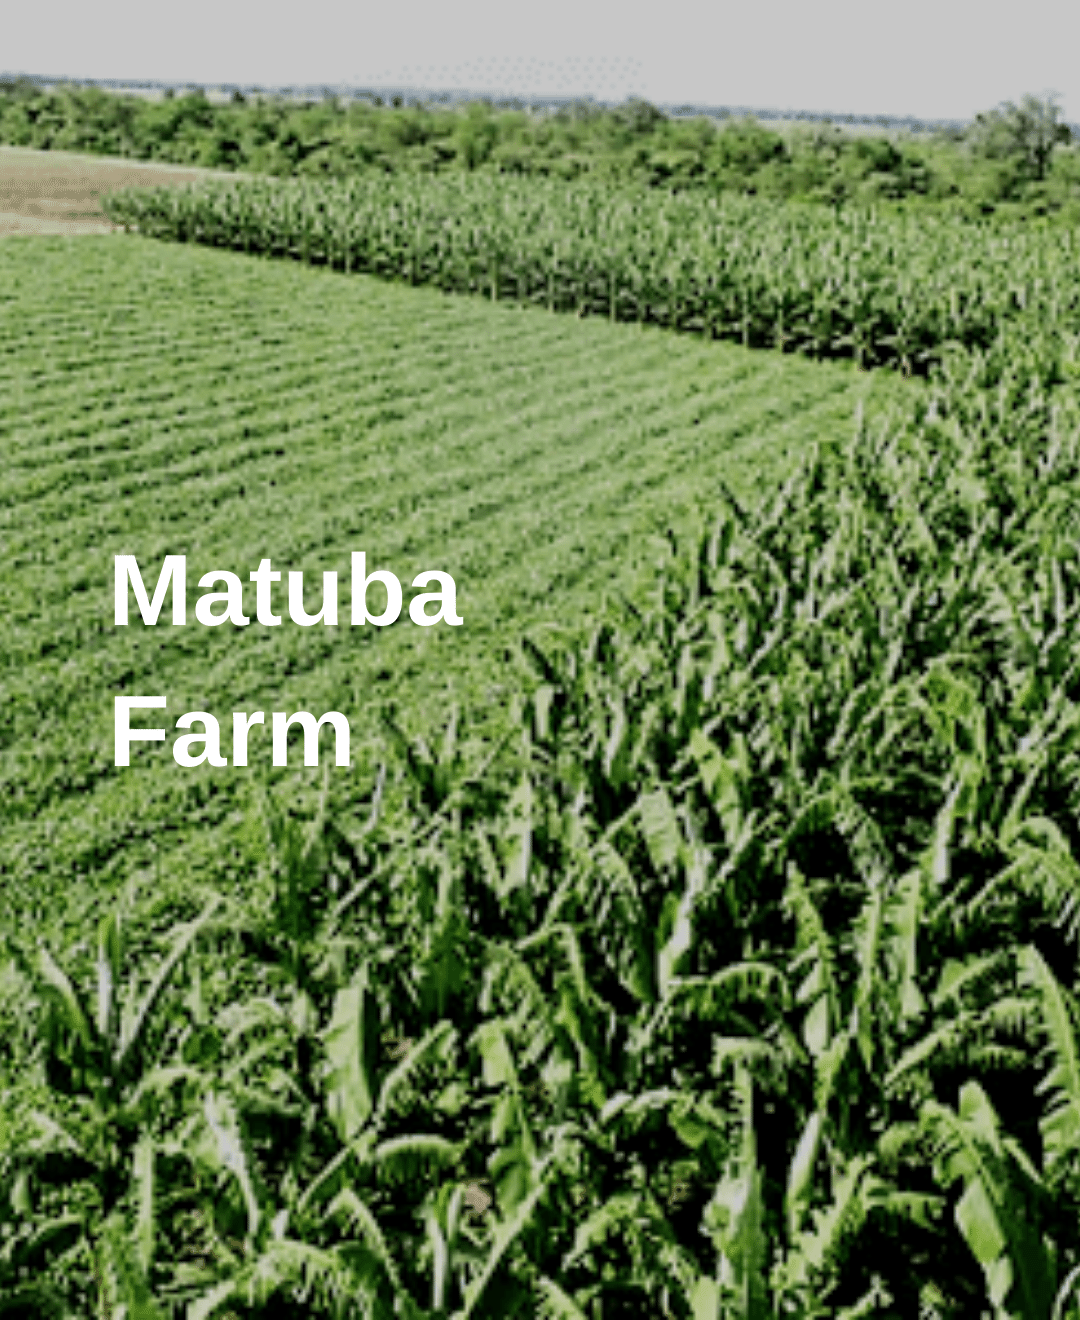 Matuba farm built by Holistic investments Africa